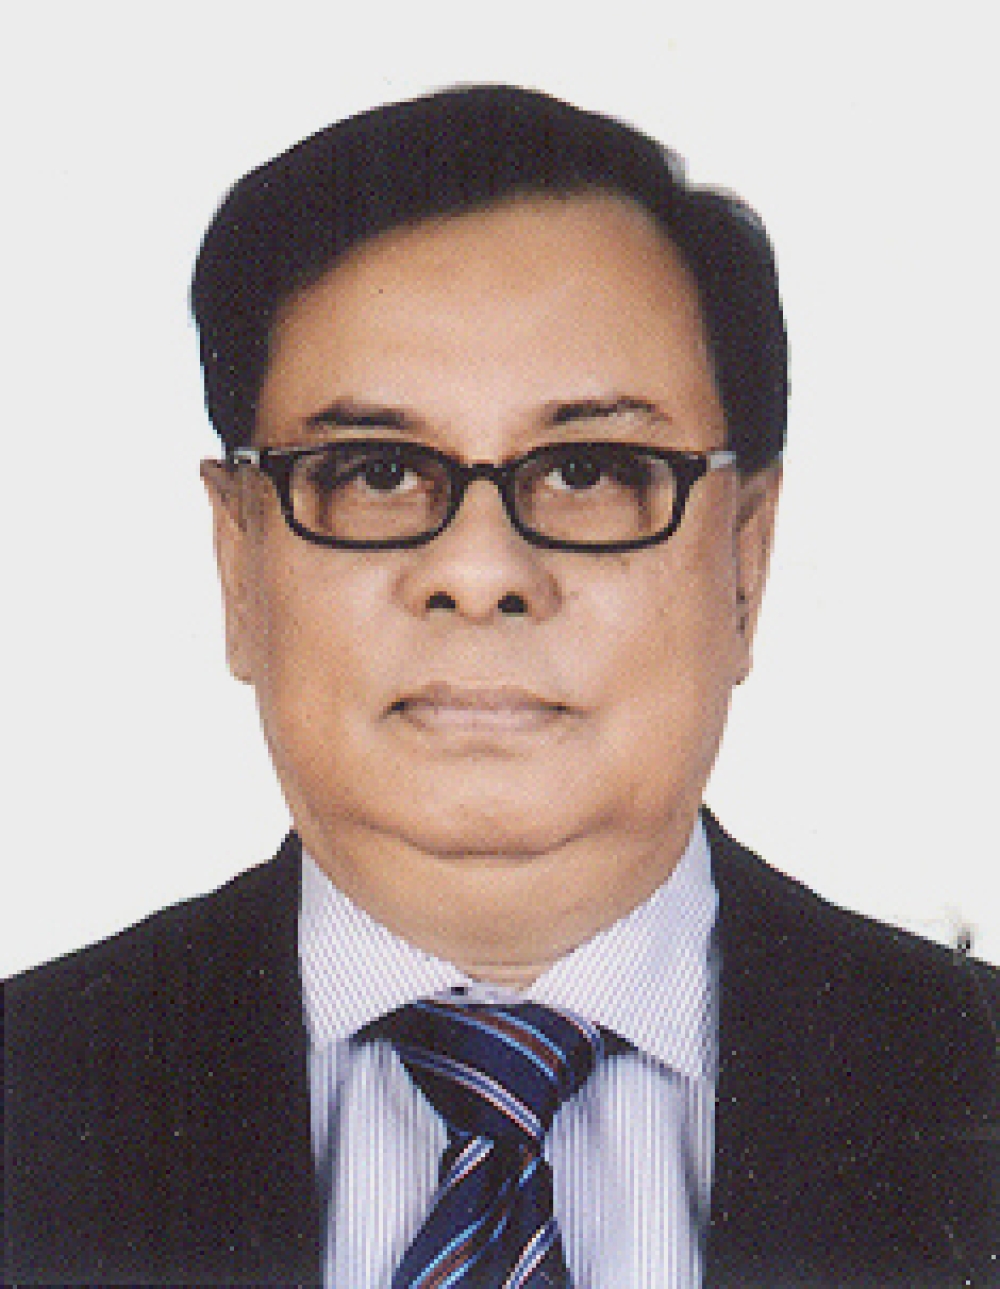 Dhaka Chamber President mourns death of Mohammad Shahjahan Khan, former President, DCCI